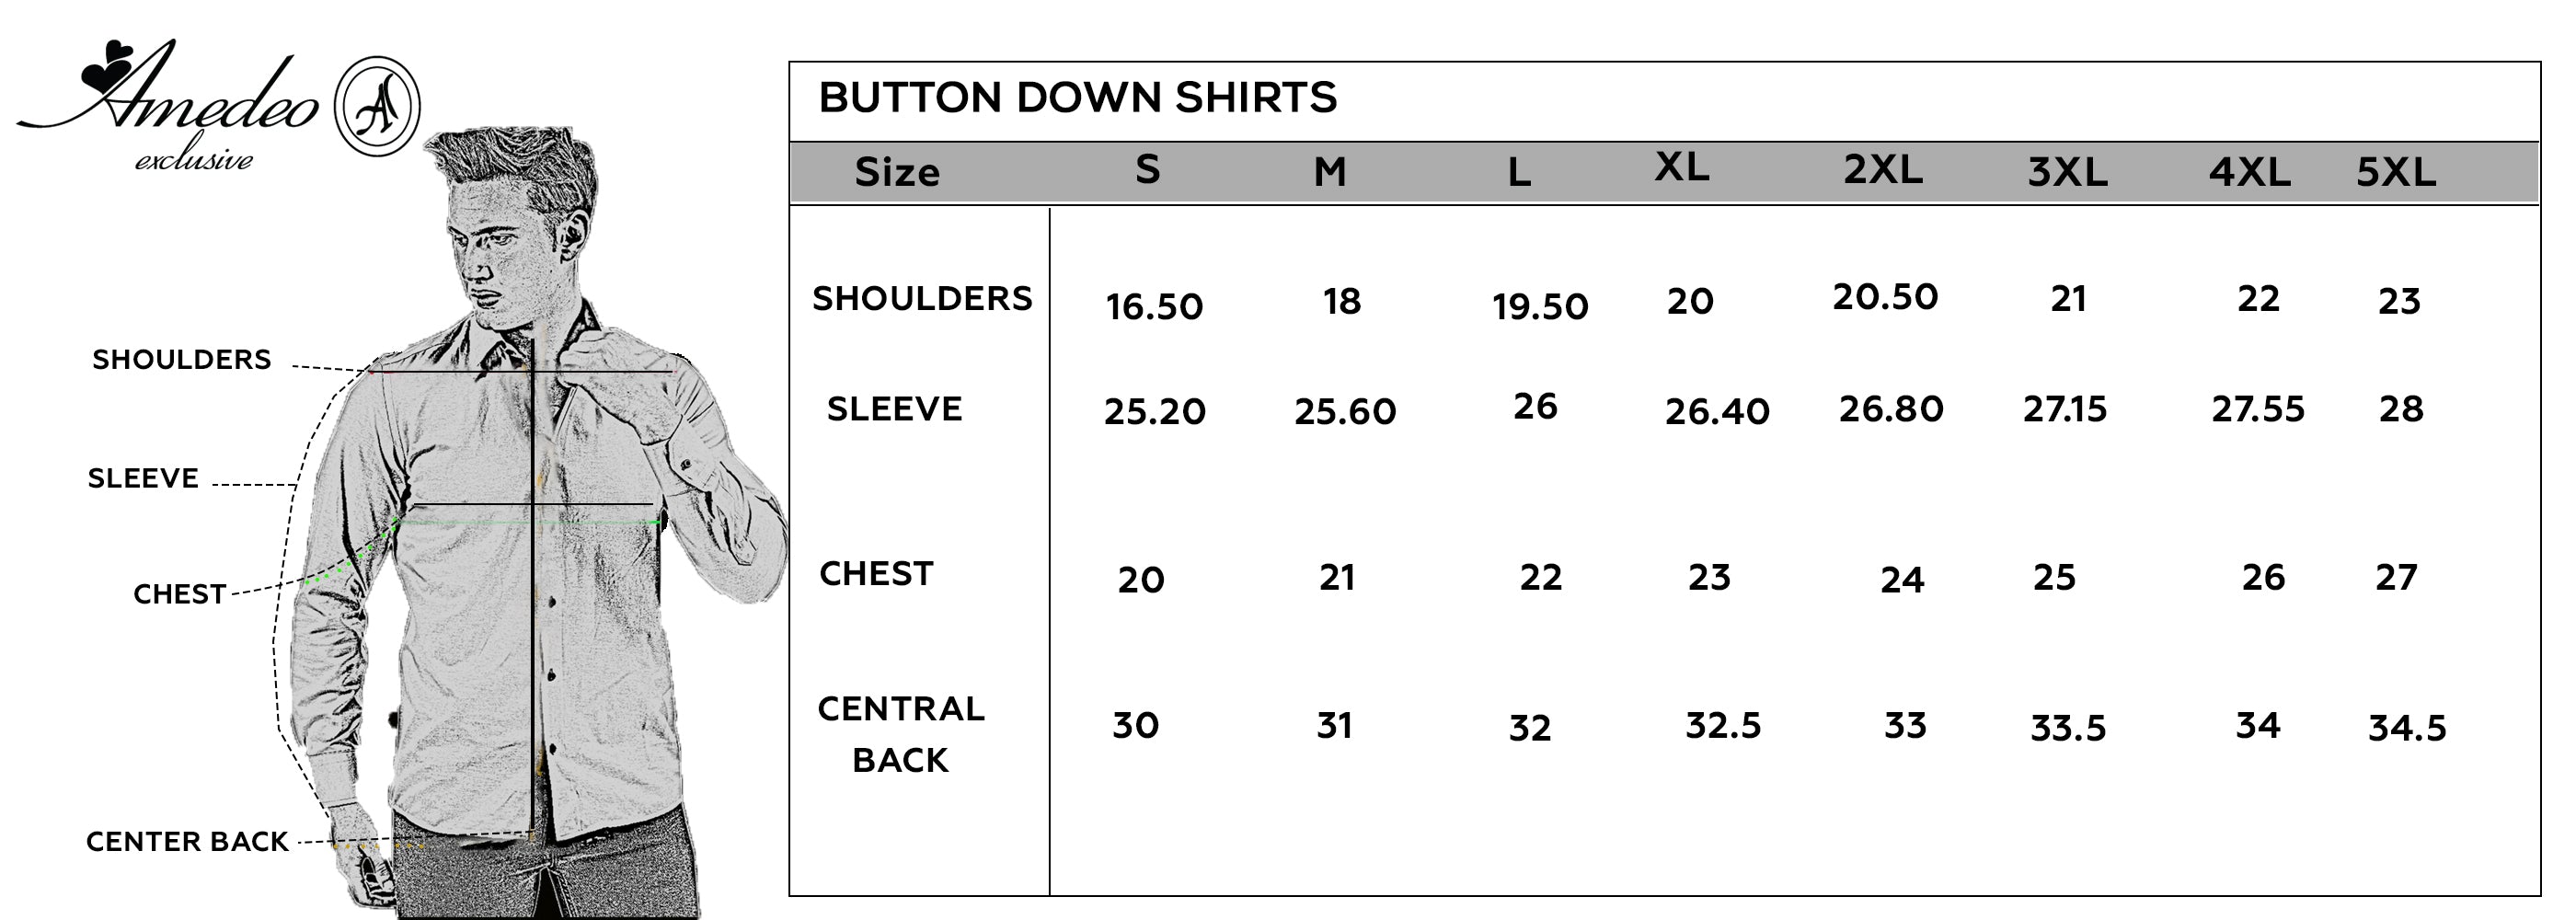 men’s dress shirts size chart